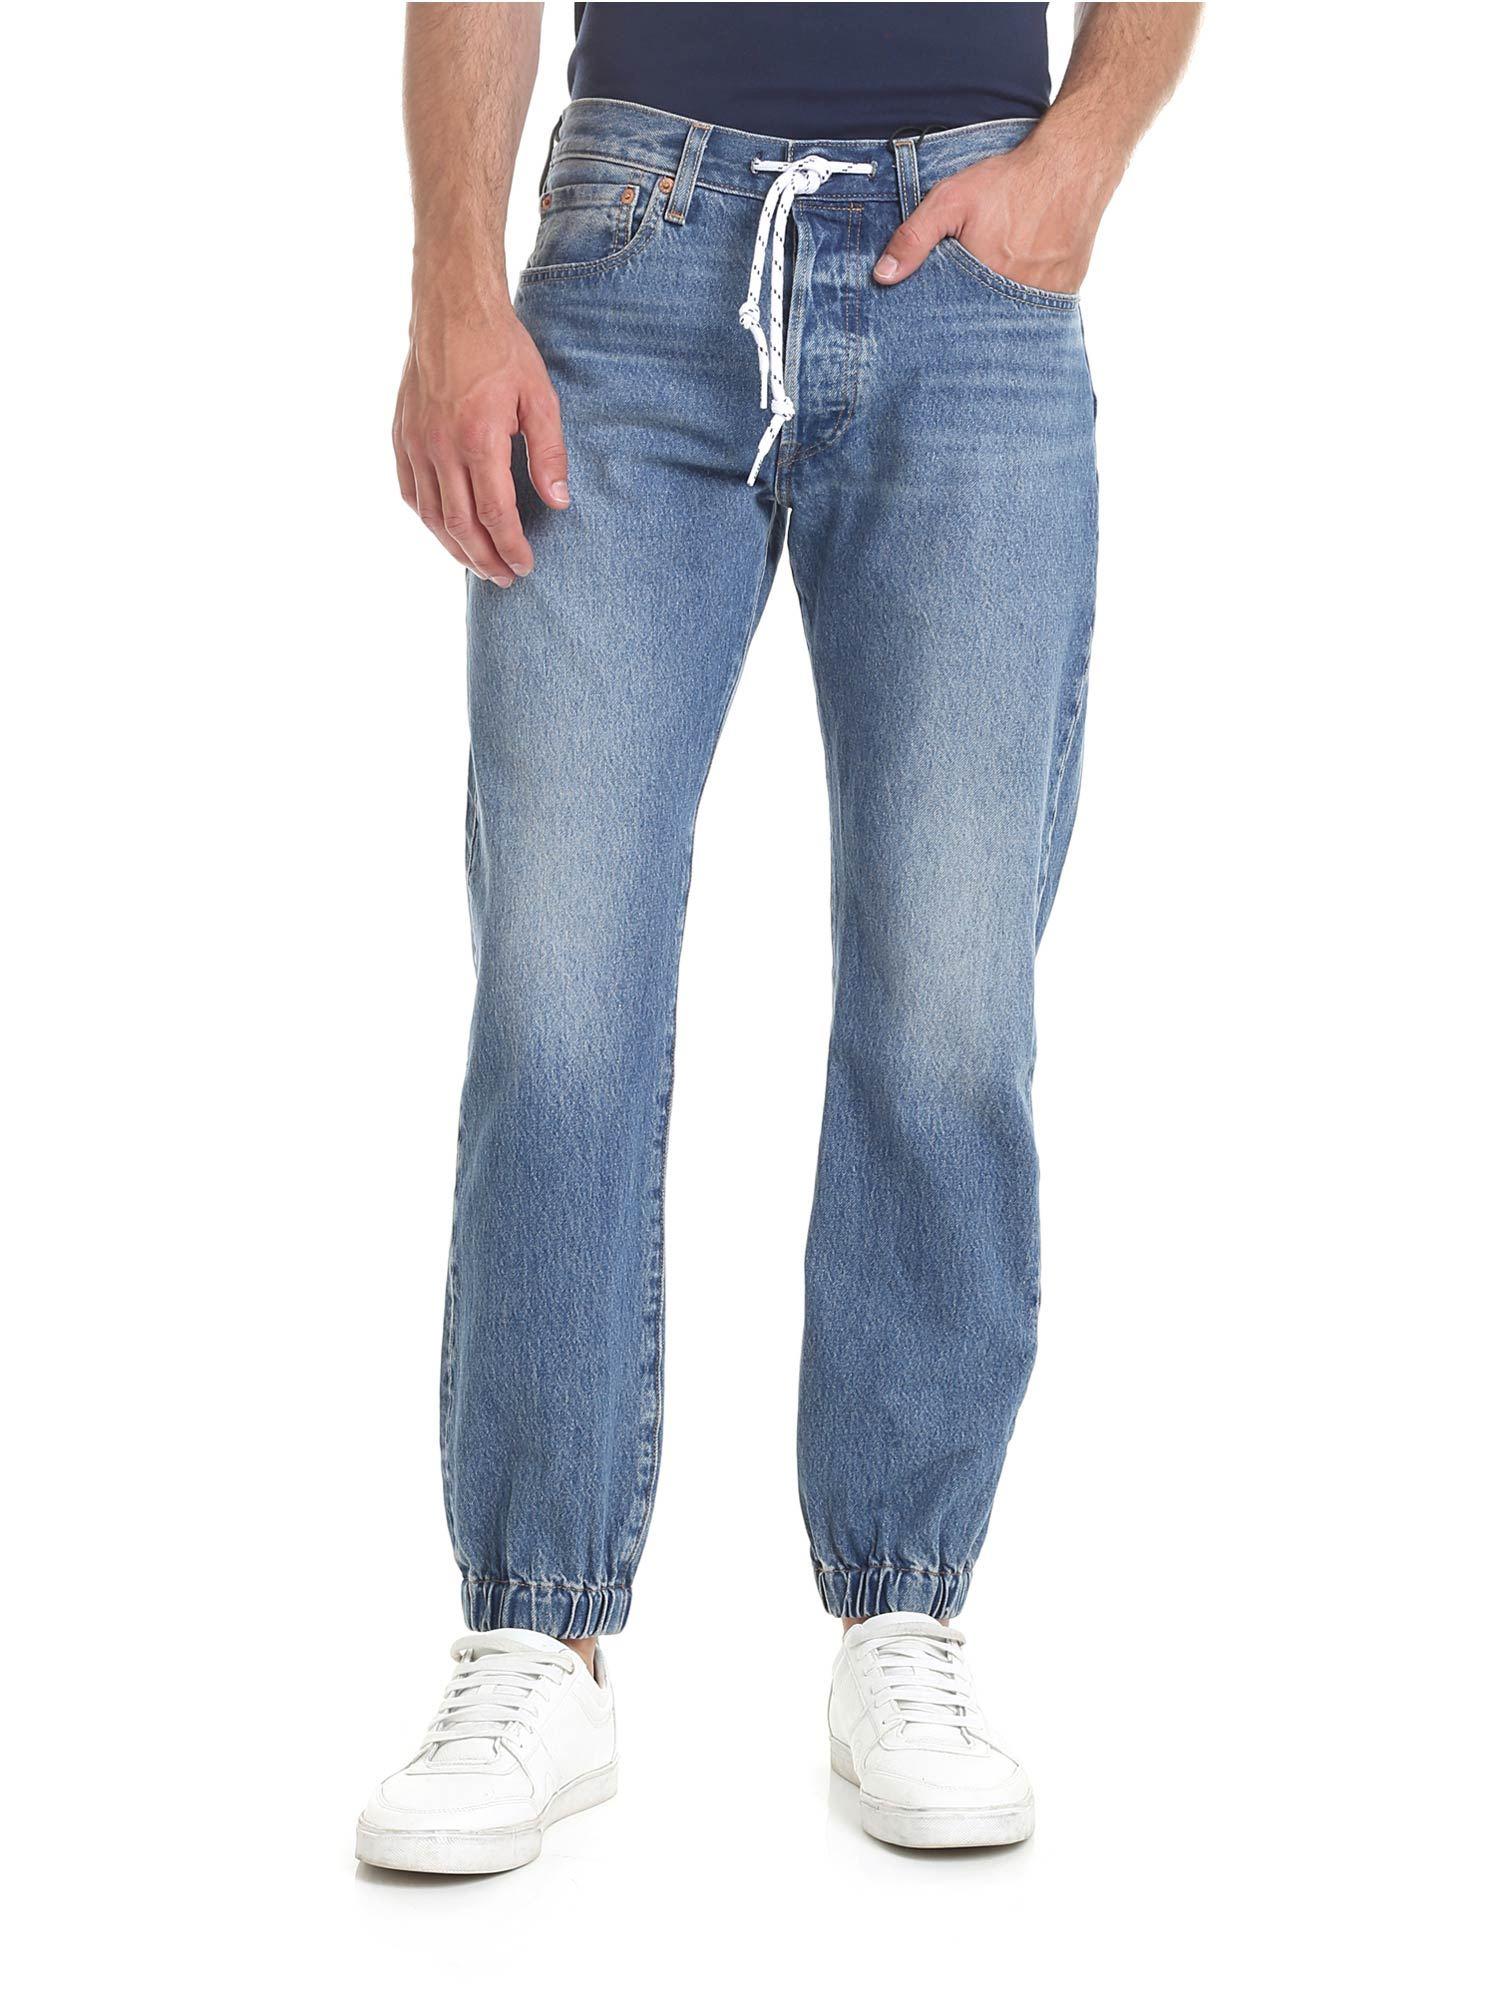 Levi's Denim Jeans 501 jogger In Blue for Men - Lyst